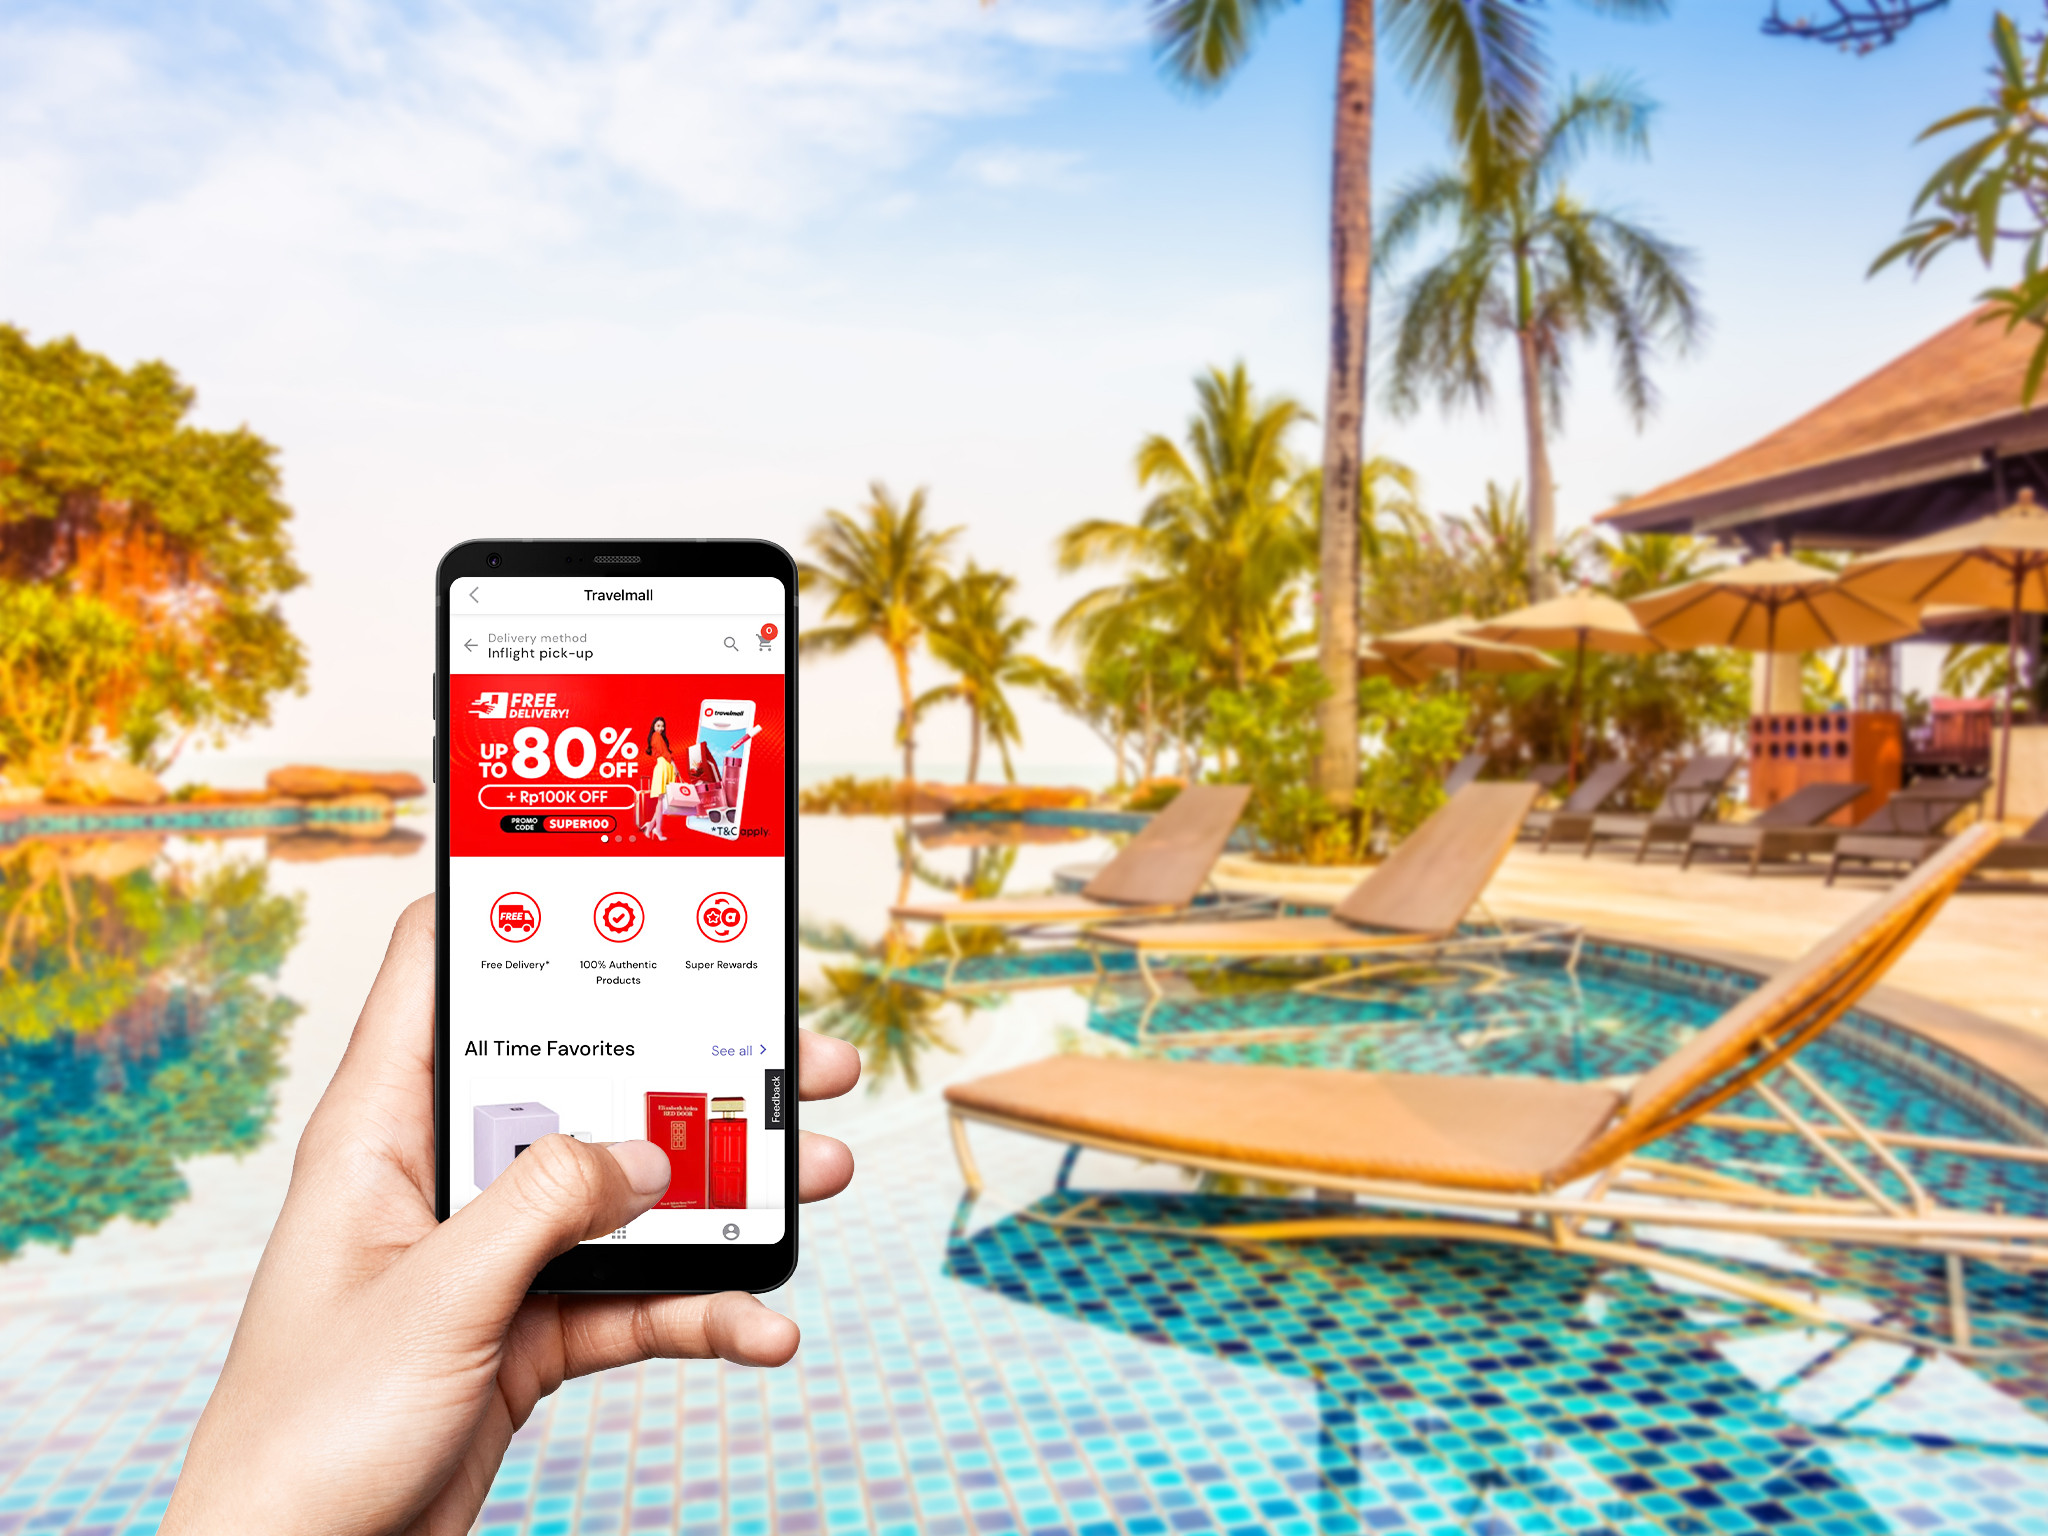 Permudah Pesan Produk Duty-Free, Airasia Super App Hadirkan Layanan Travelmall 